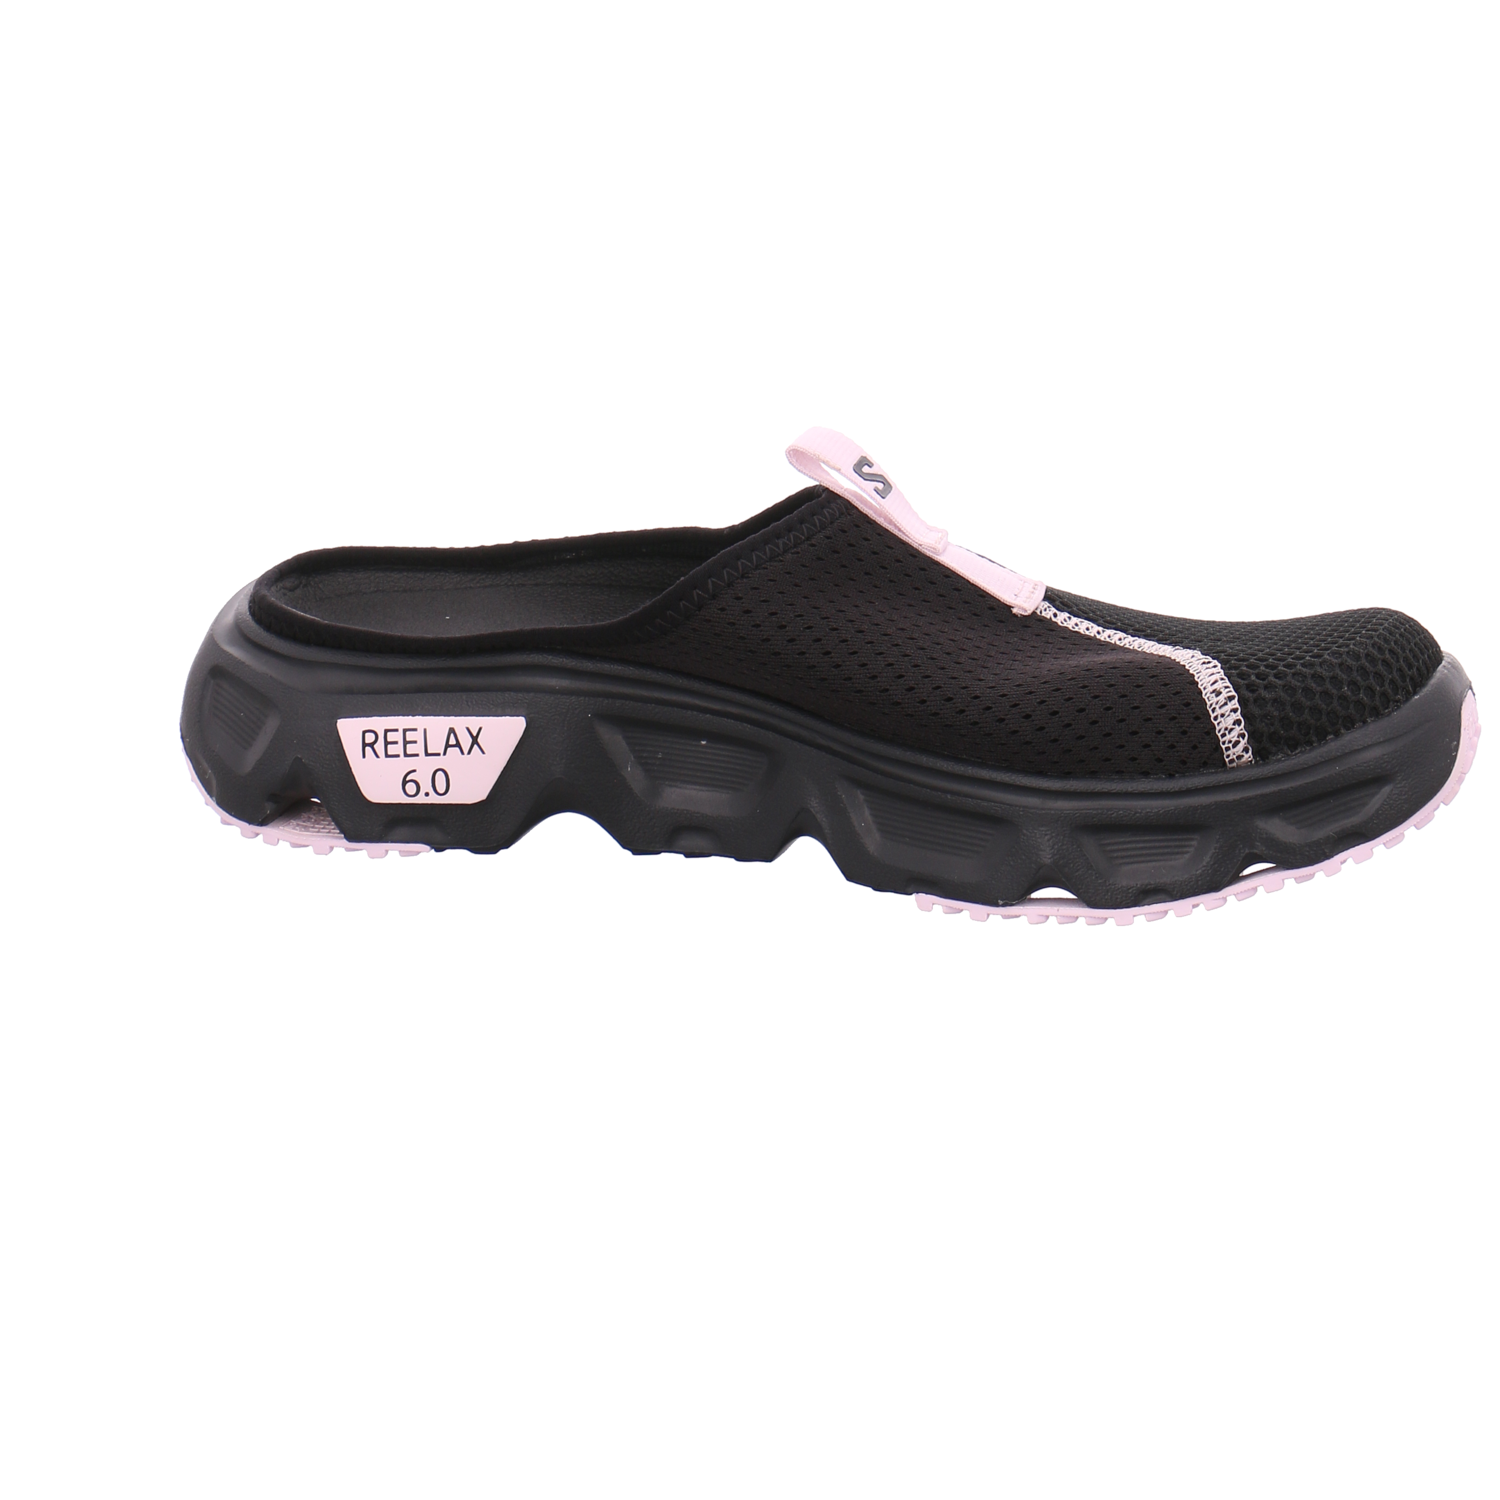 Salomon Reelax Slide 6.0 Women's Recovery Shoes Black/Black/Crandle Pink 